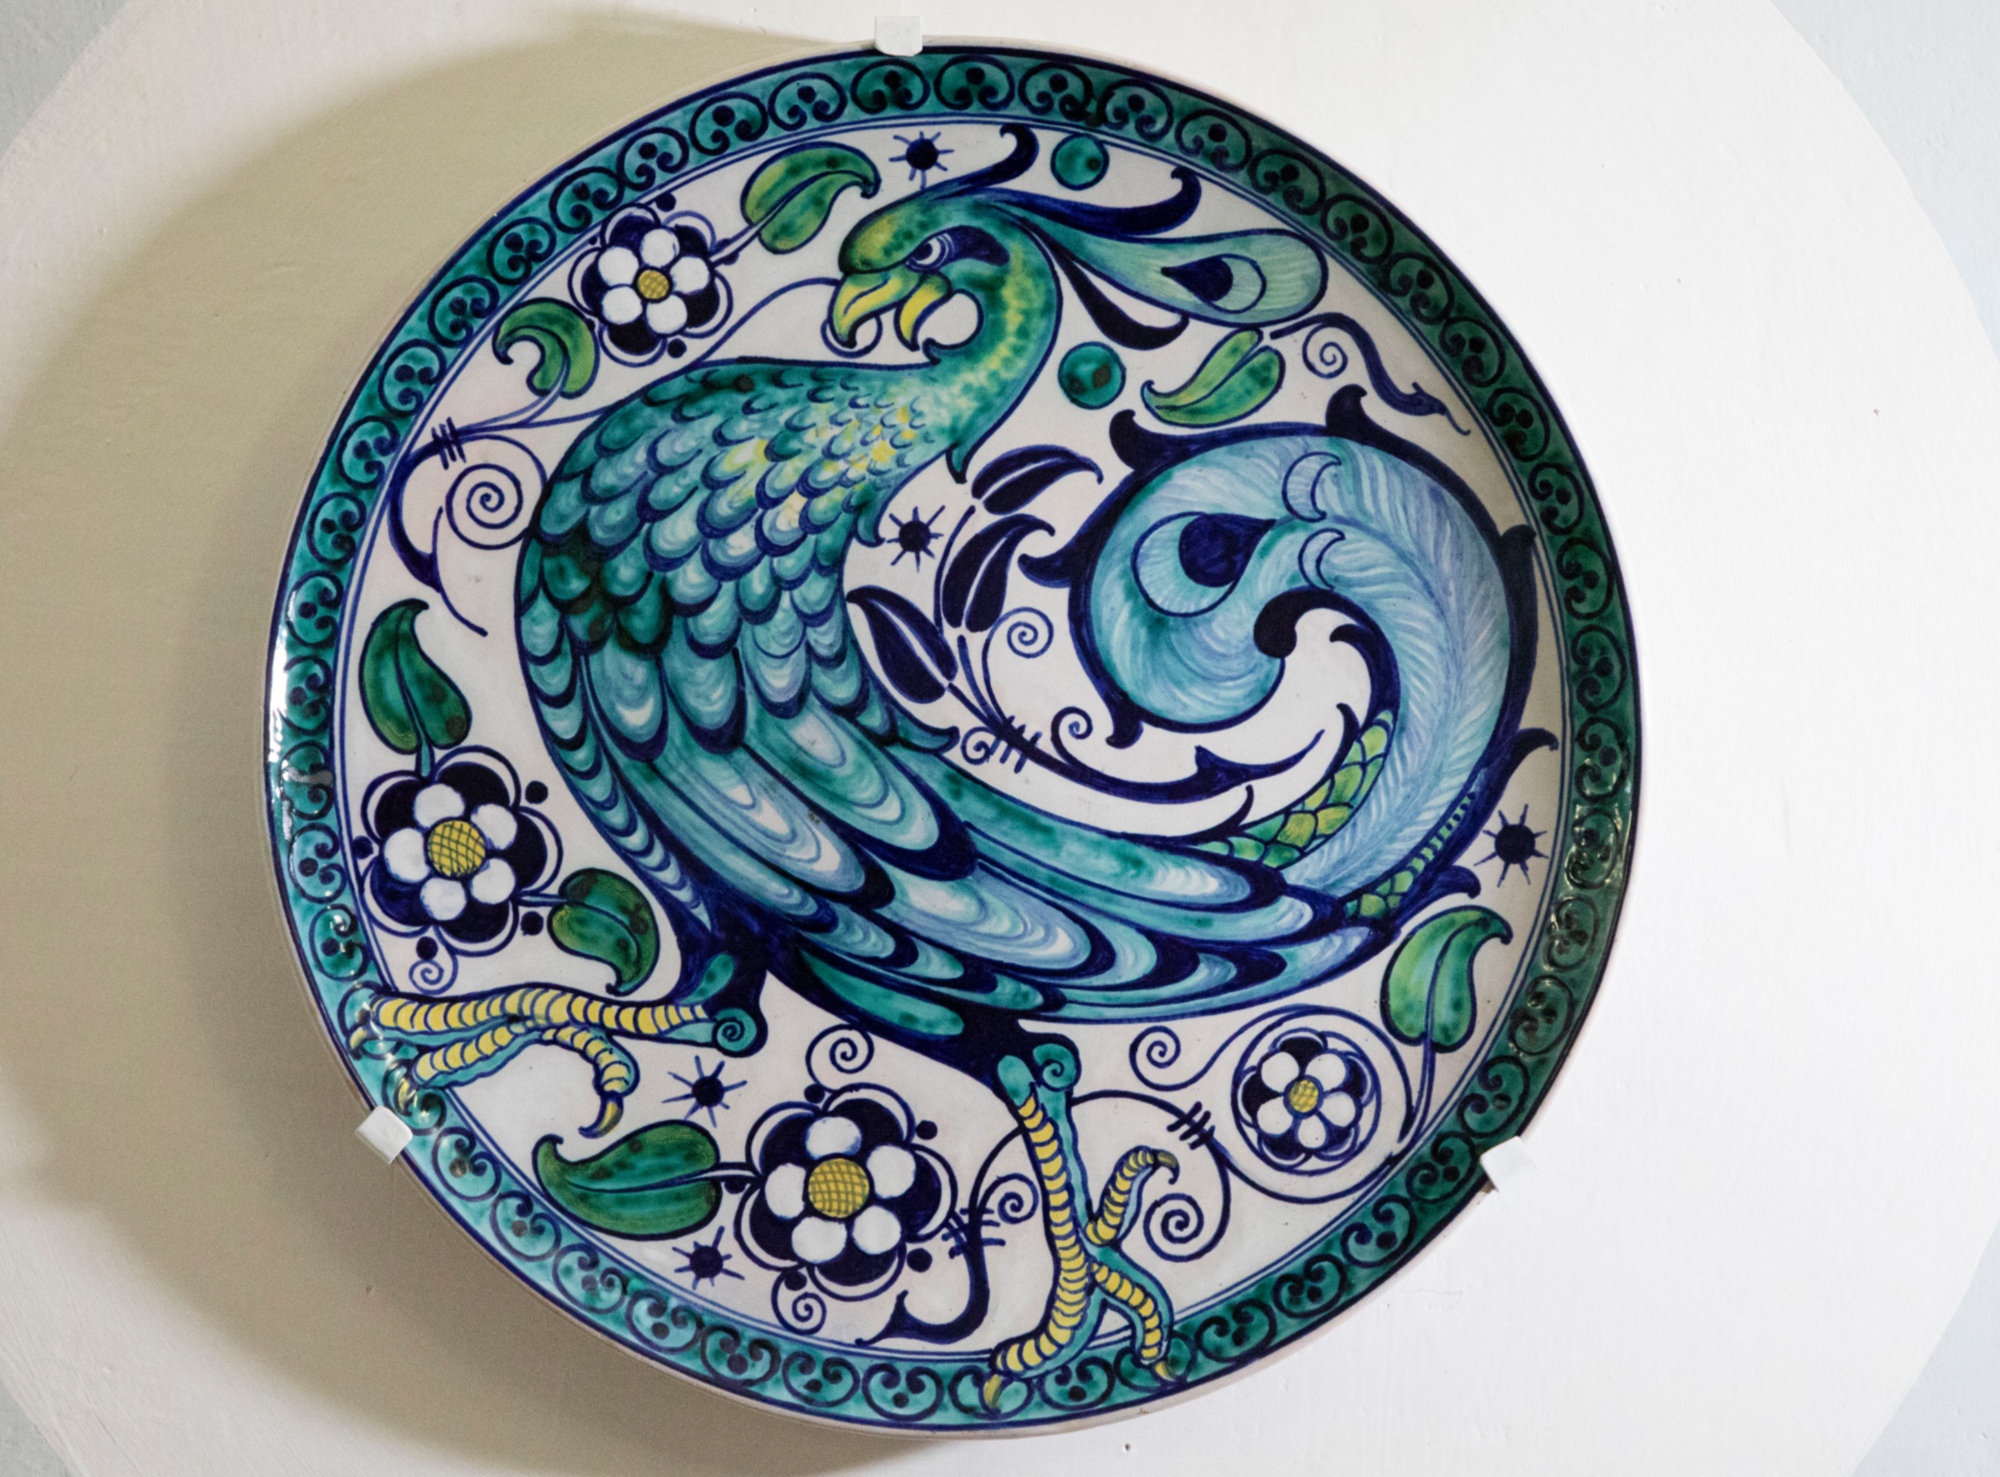 A ceramic by Galileo Chini